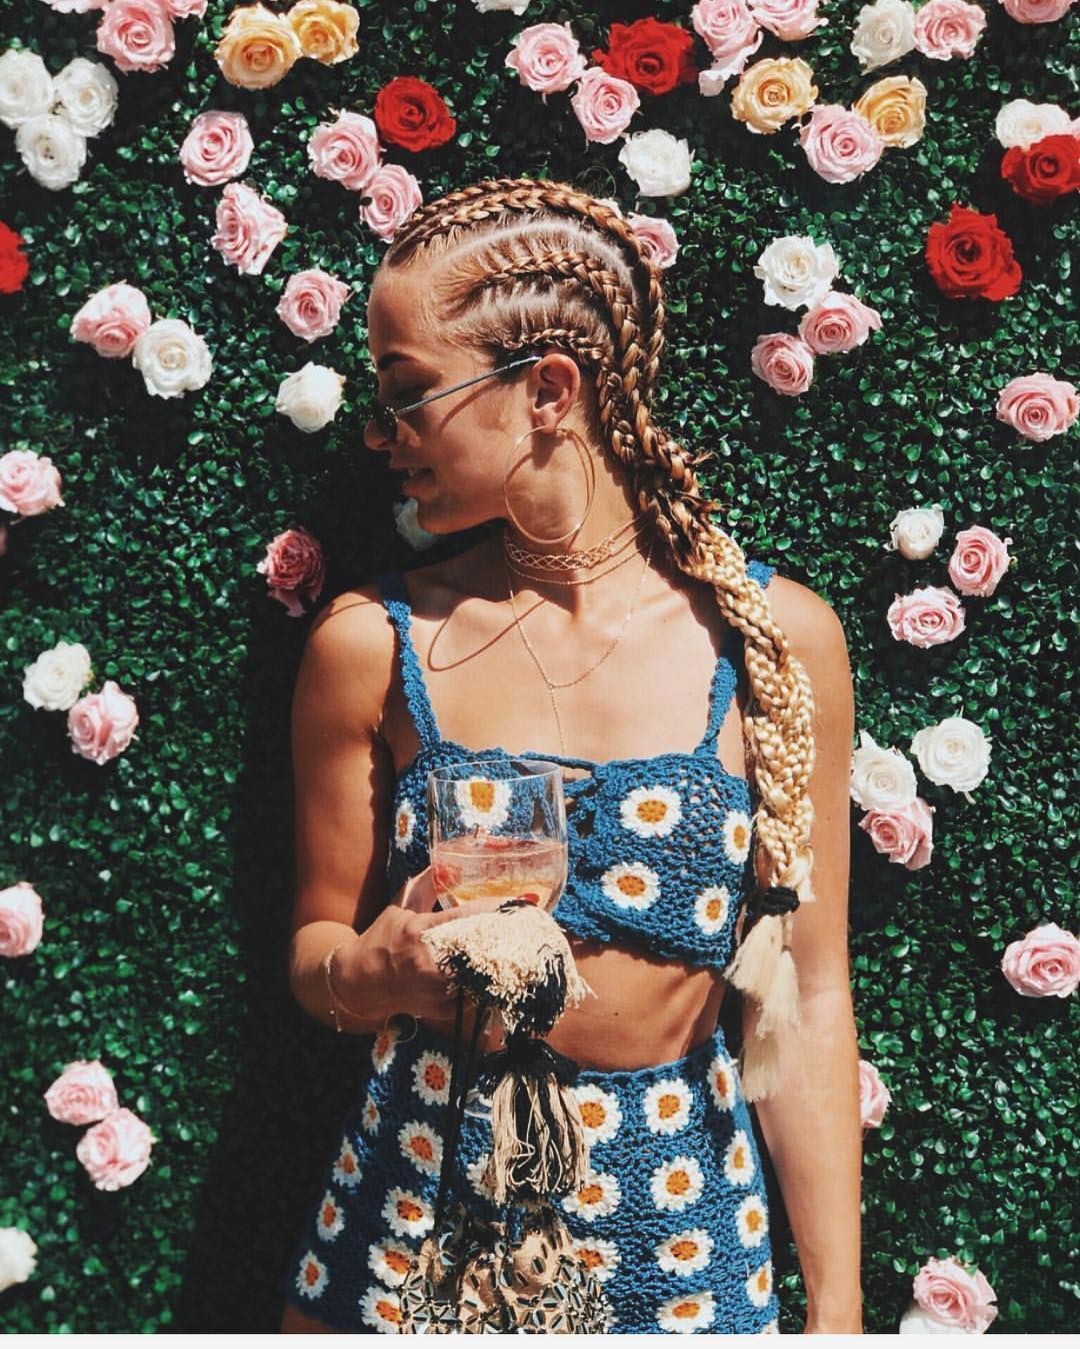 Yvette Arriaga fashion accessory, floral design colour ideas, model photography: Floral design,  Coachella Outfits,  Fashion accessory  